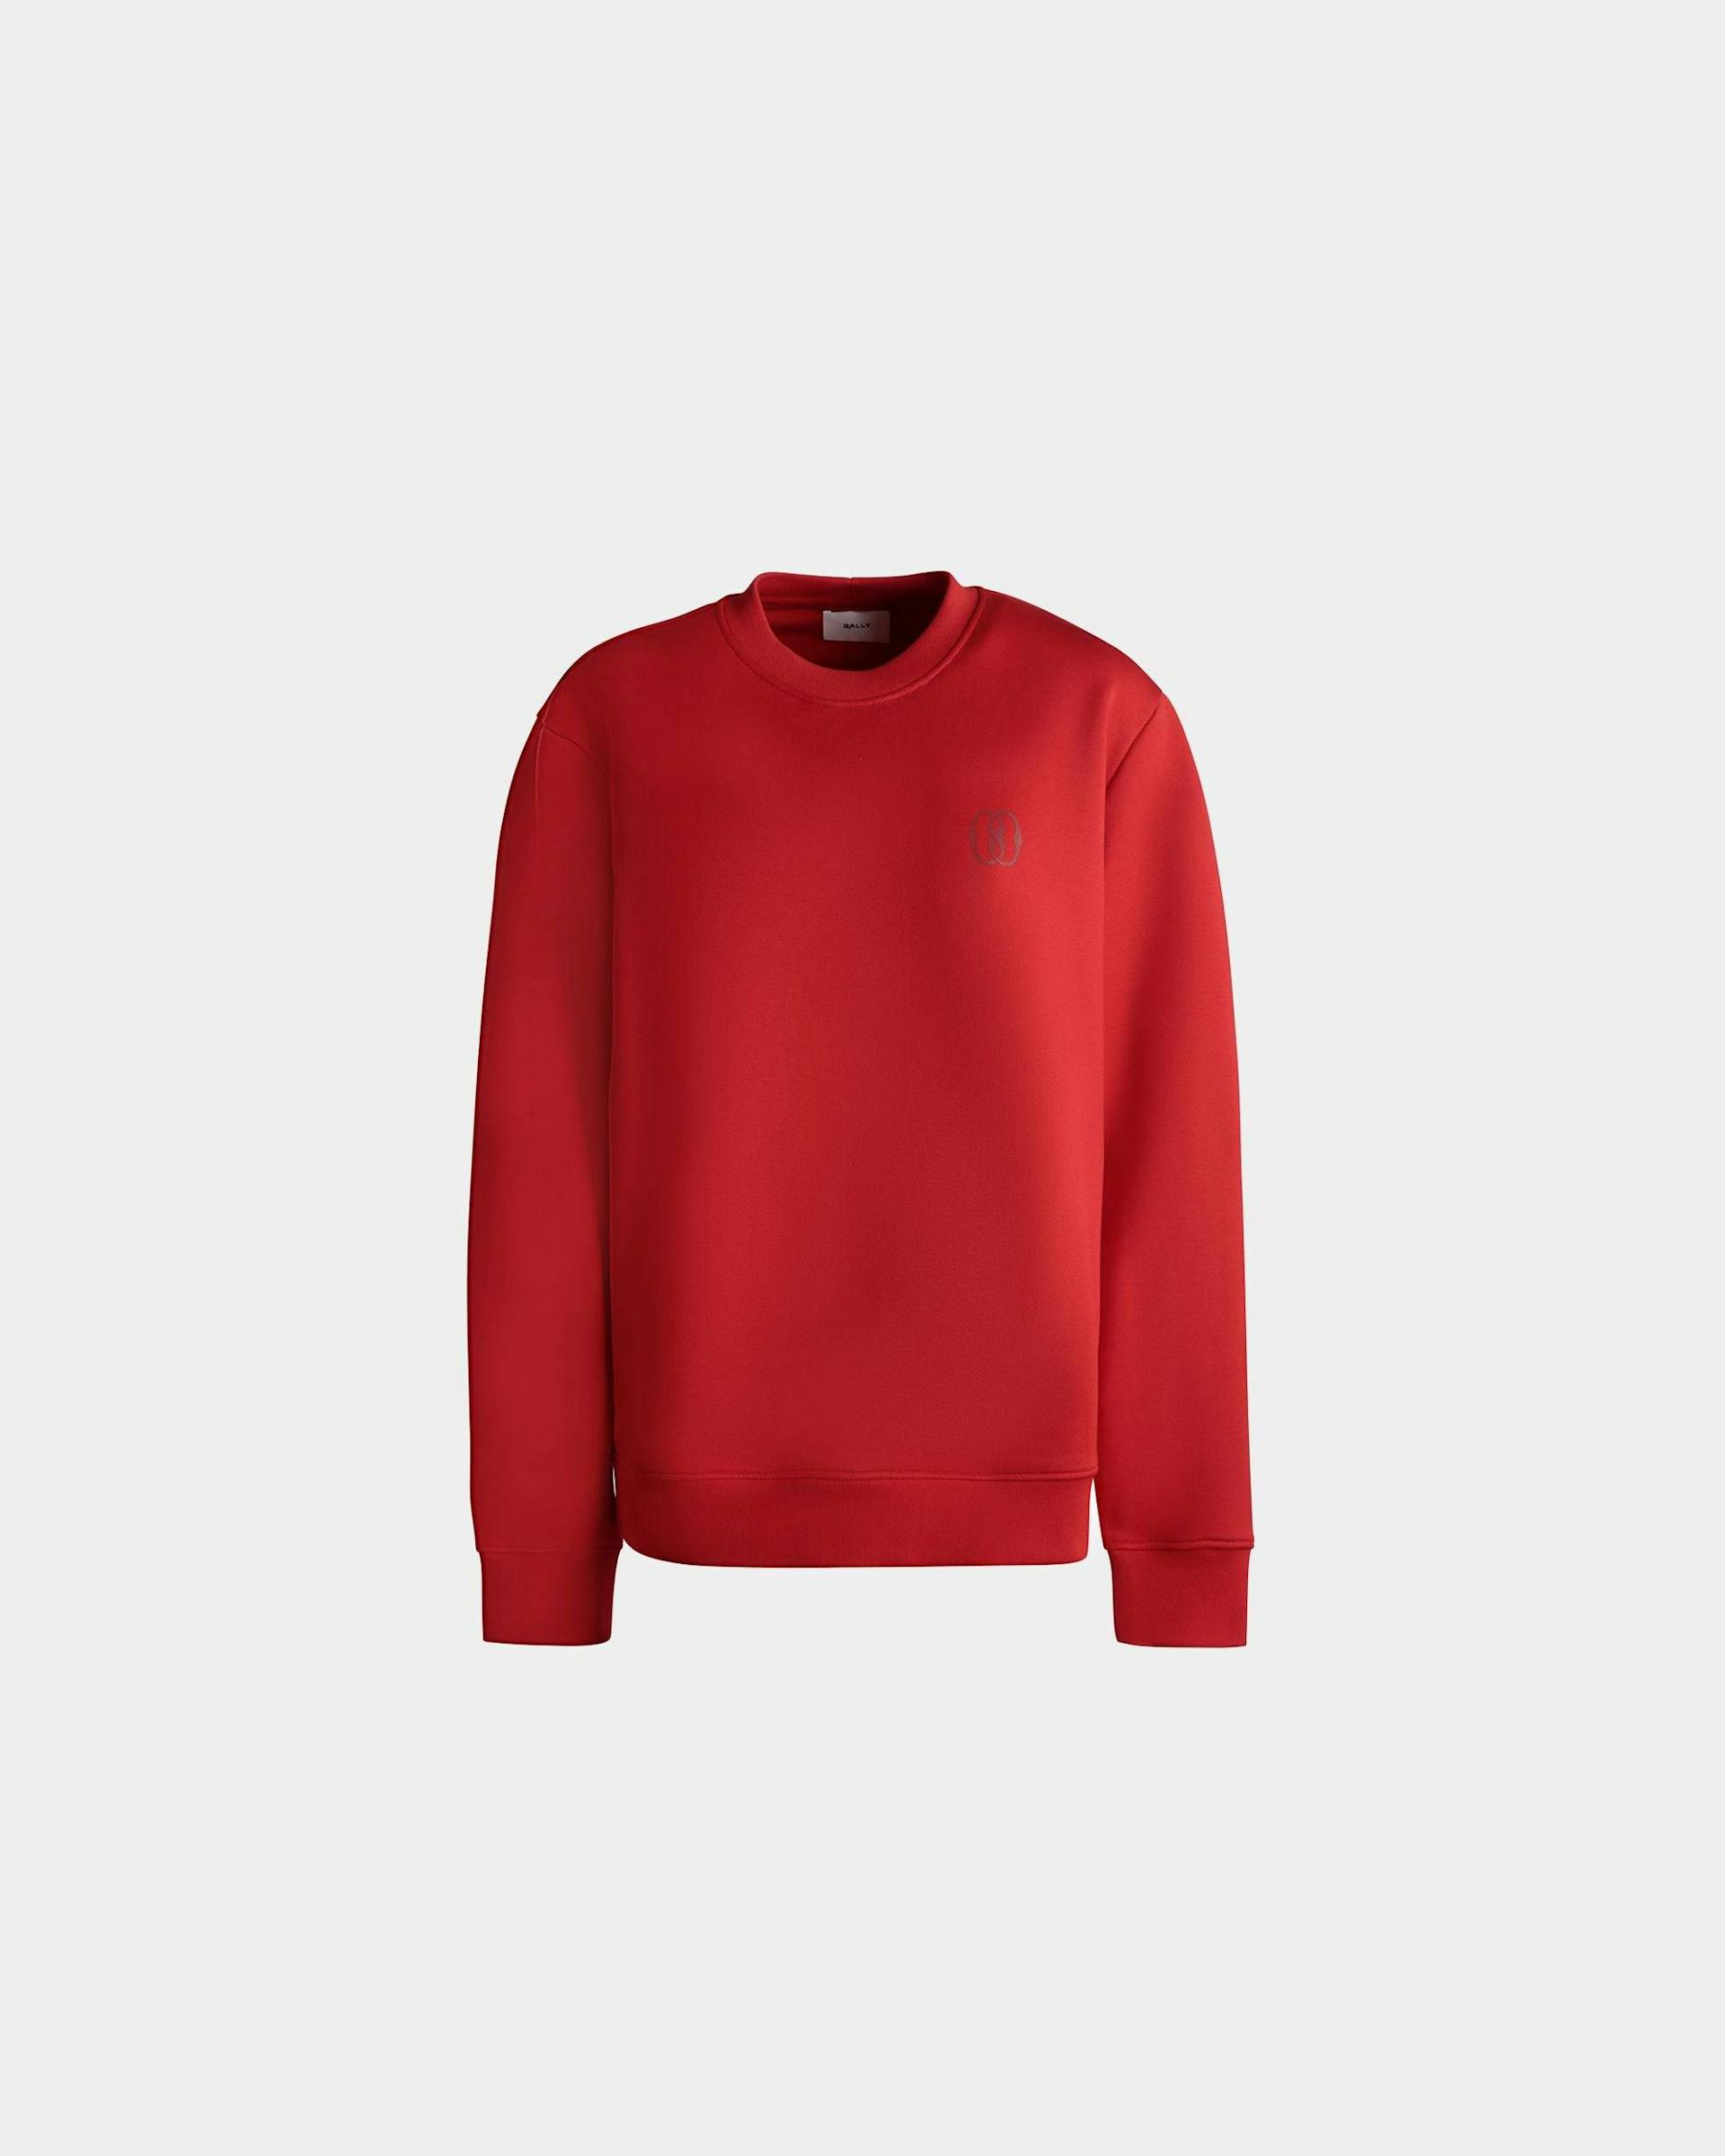 Women's Crewneck Sweatshirt In Red Cotton | Bally | Still Life Front